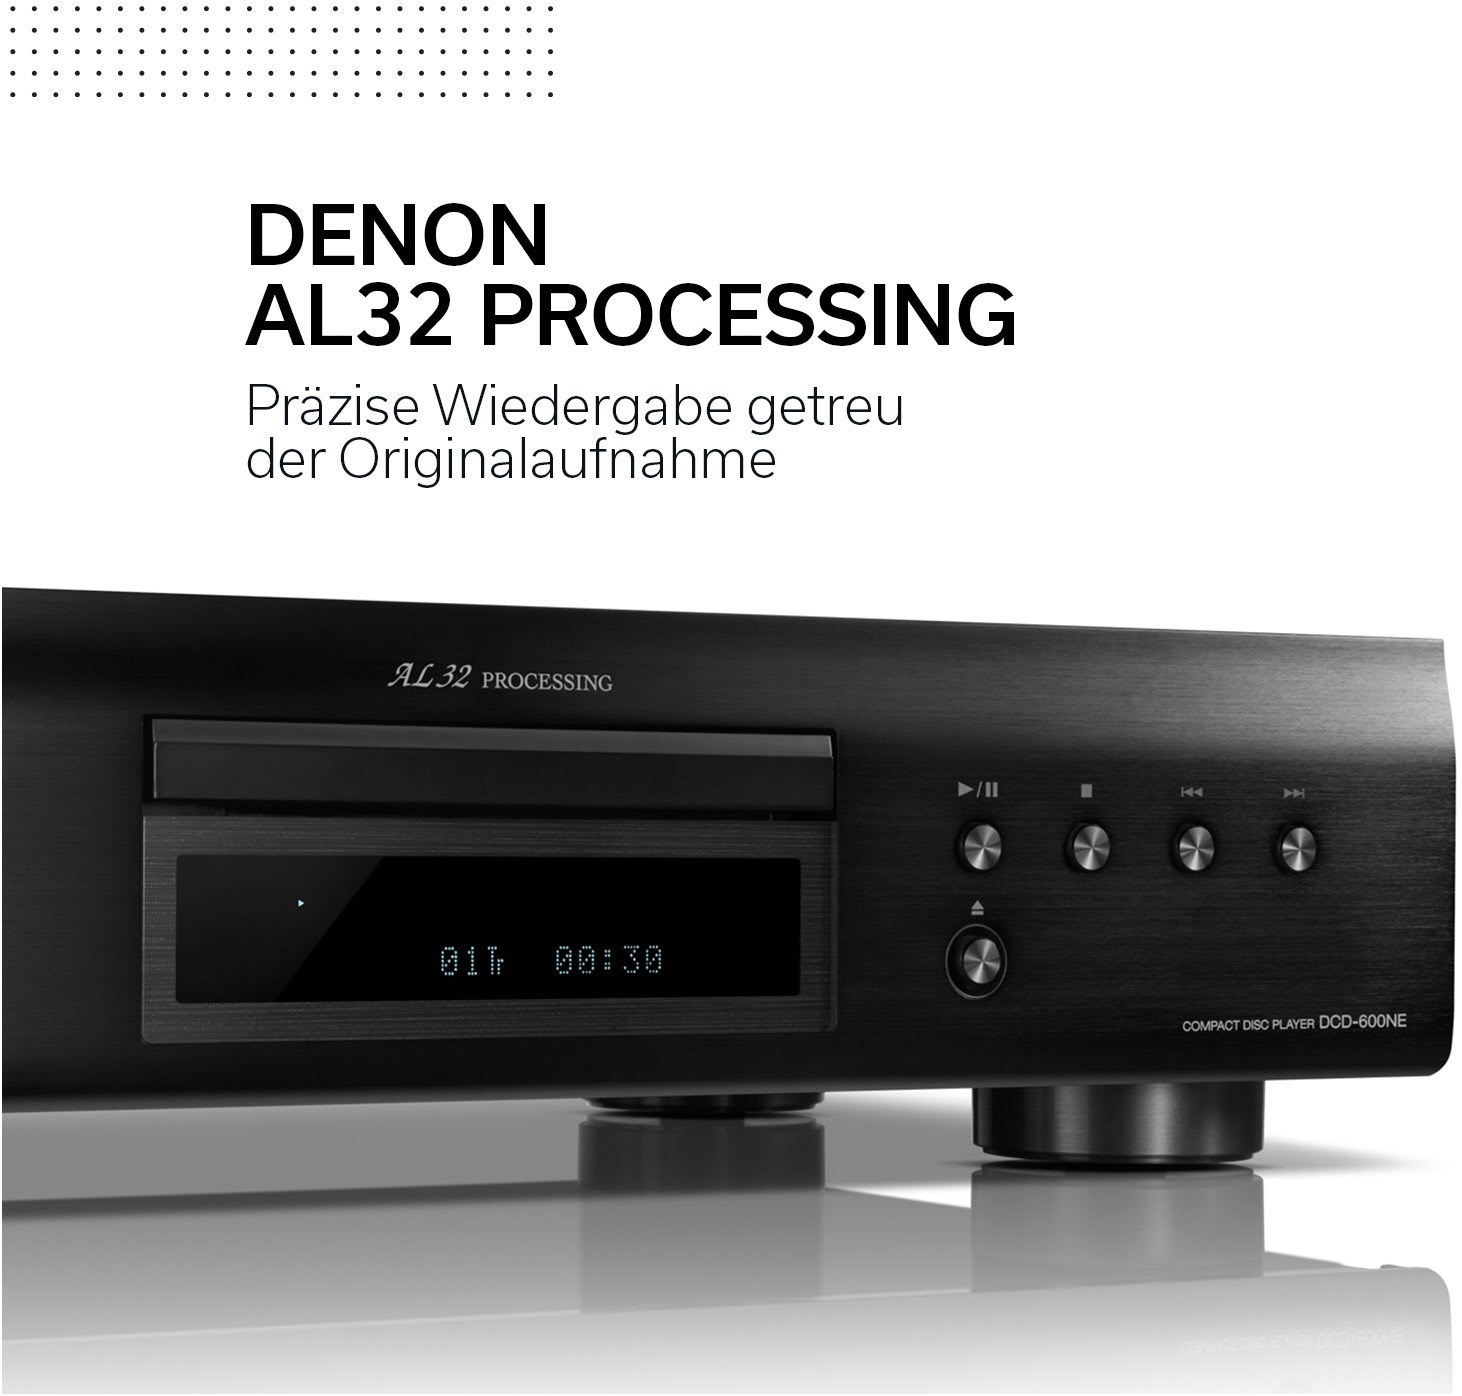 Denon CD-Player DCD-600NE Black